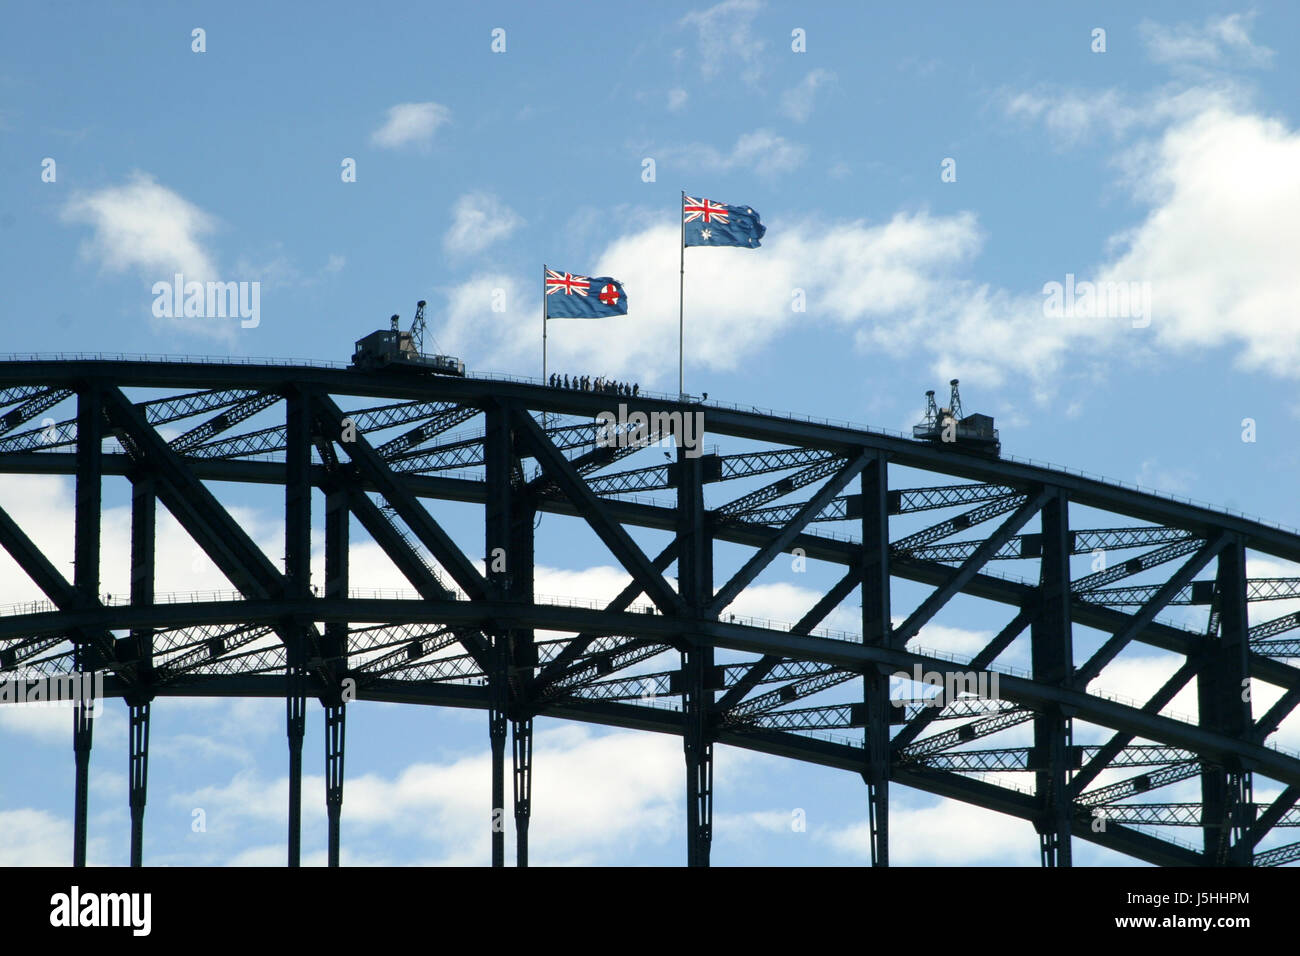 Architekturstadt Stadtbrücke Hafen Australien Flagge Anblick Ansicht outlook Stockfoto